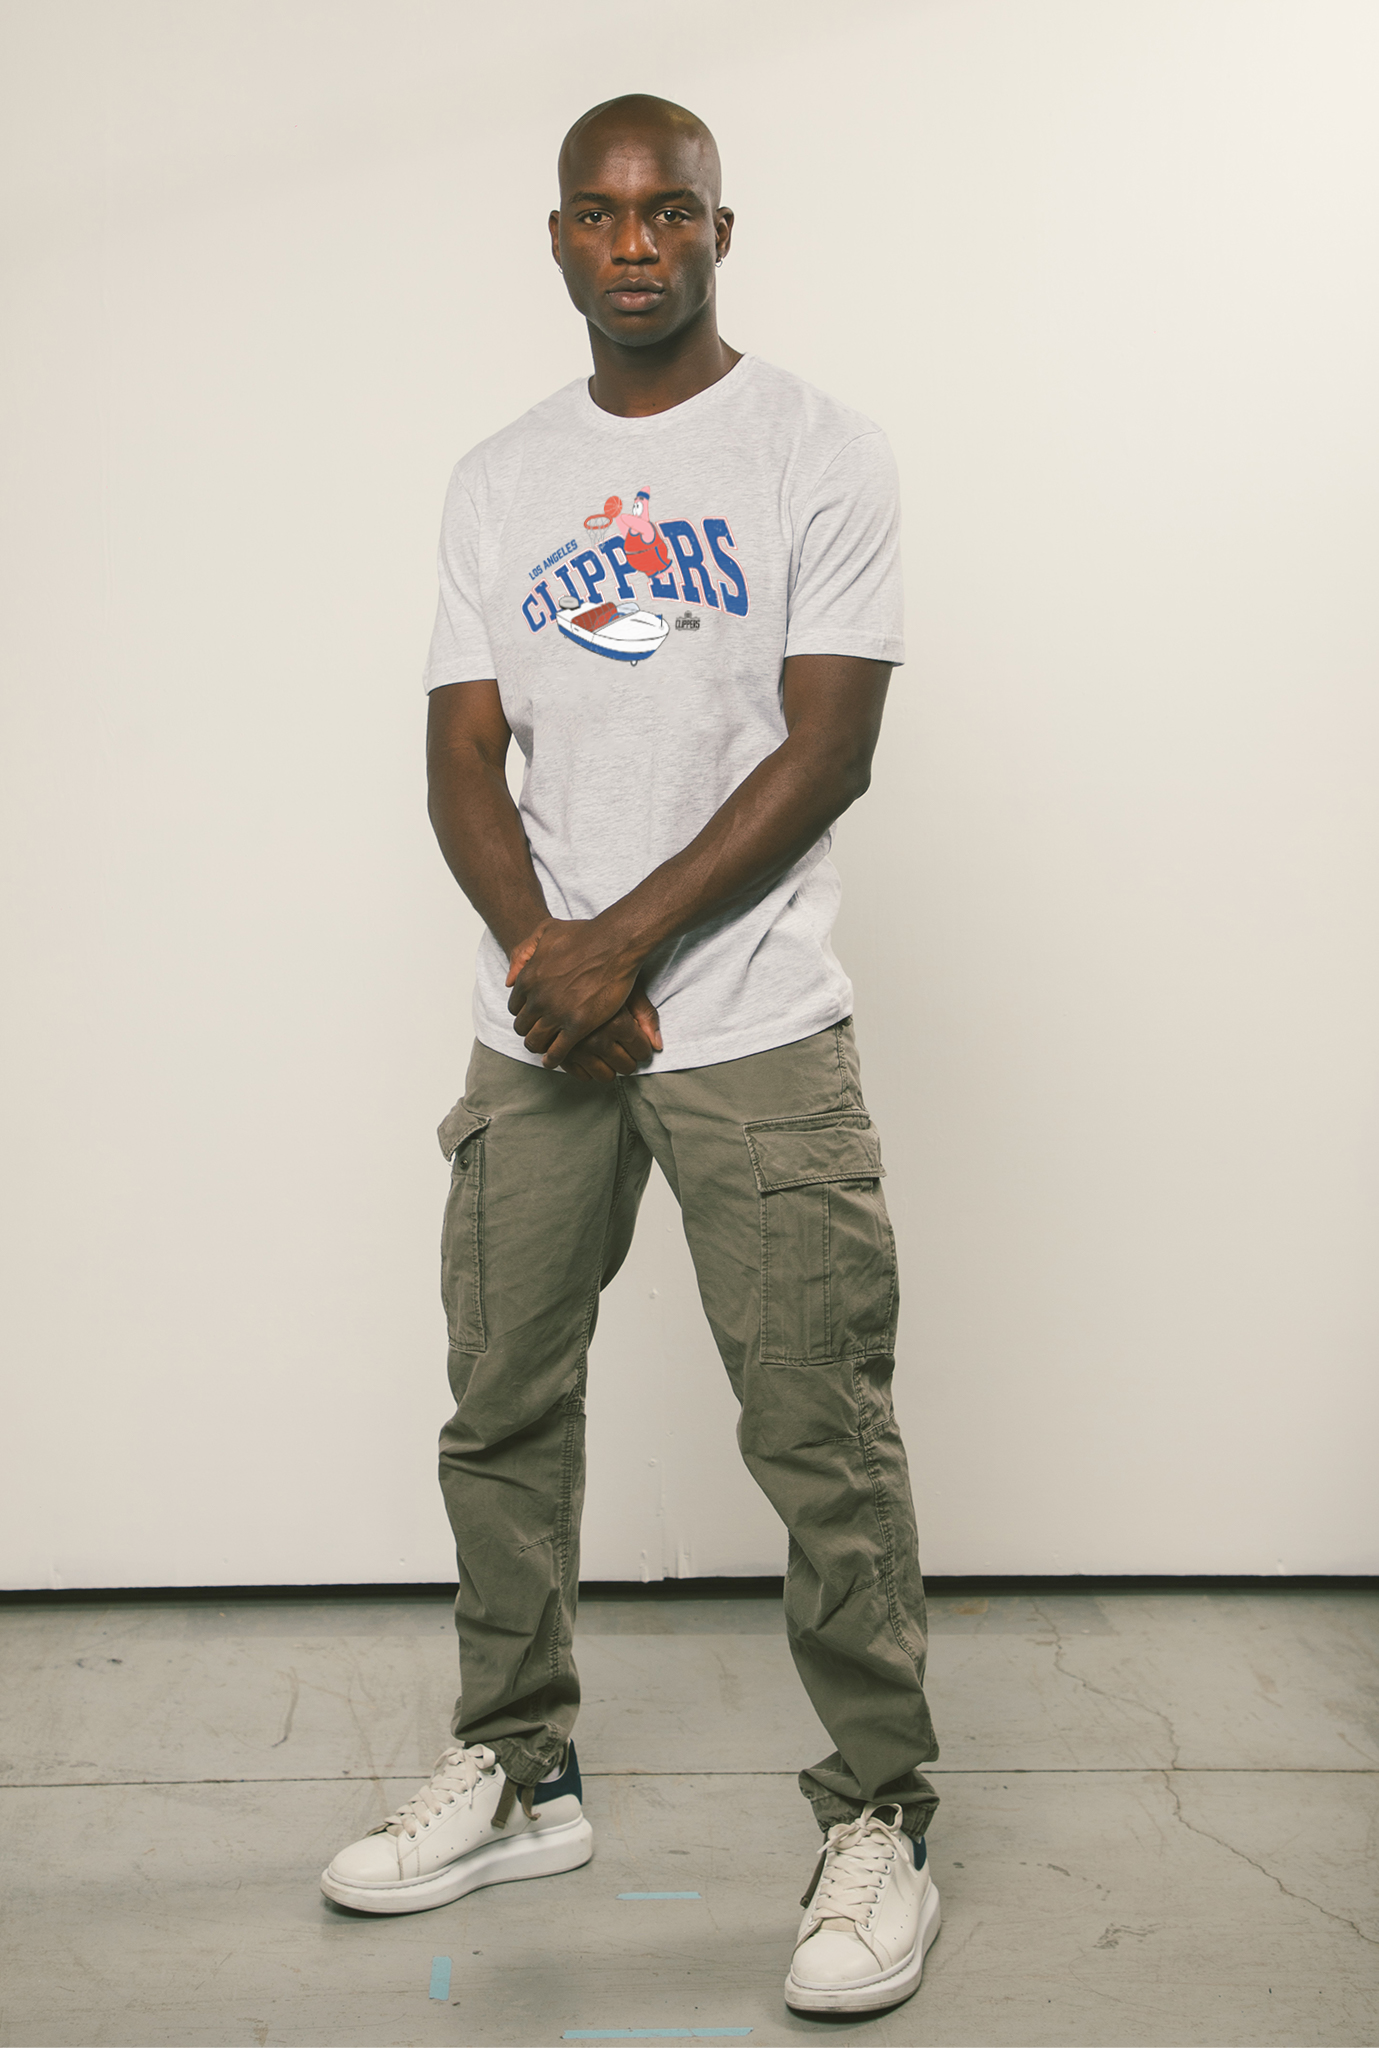 LA Clippers Patrick T-Shirt - Ash